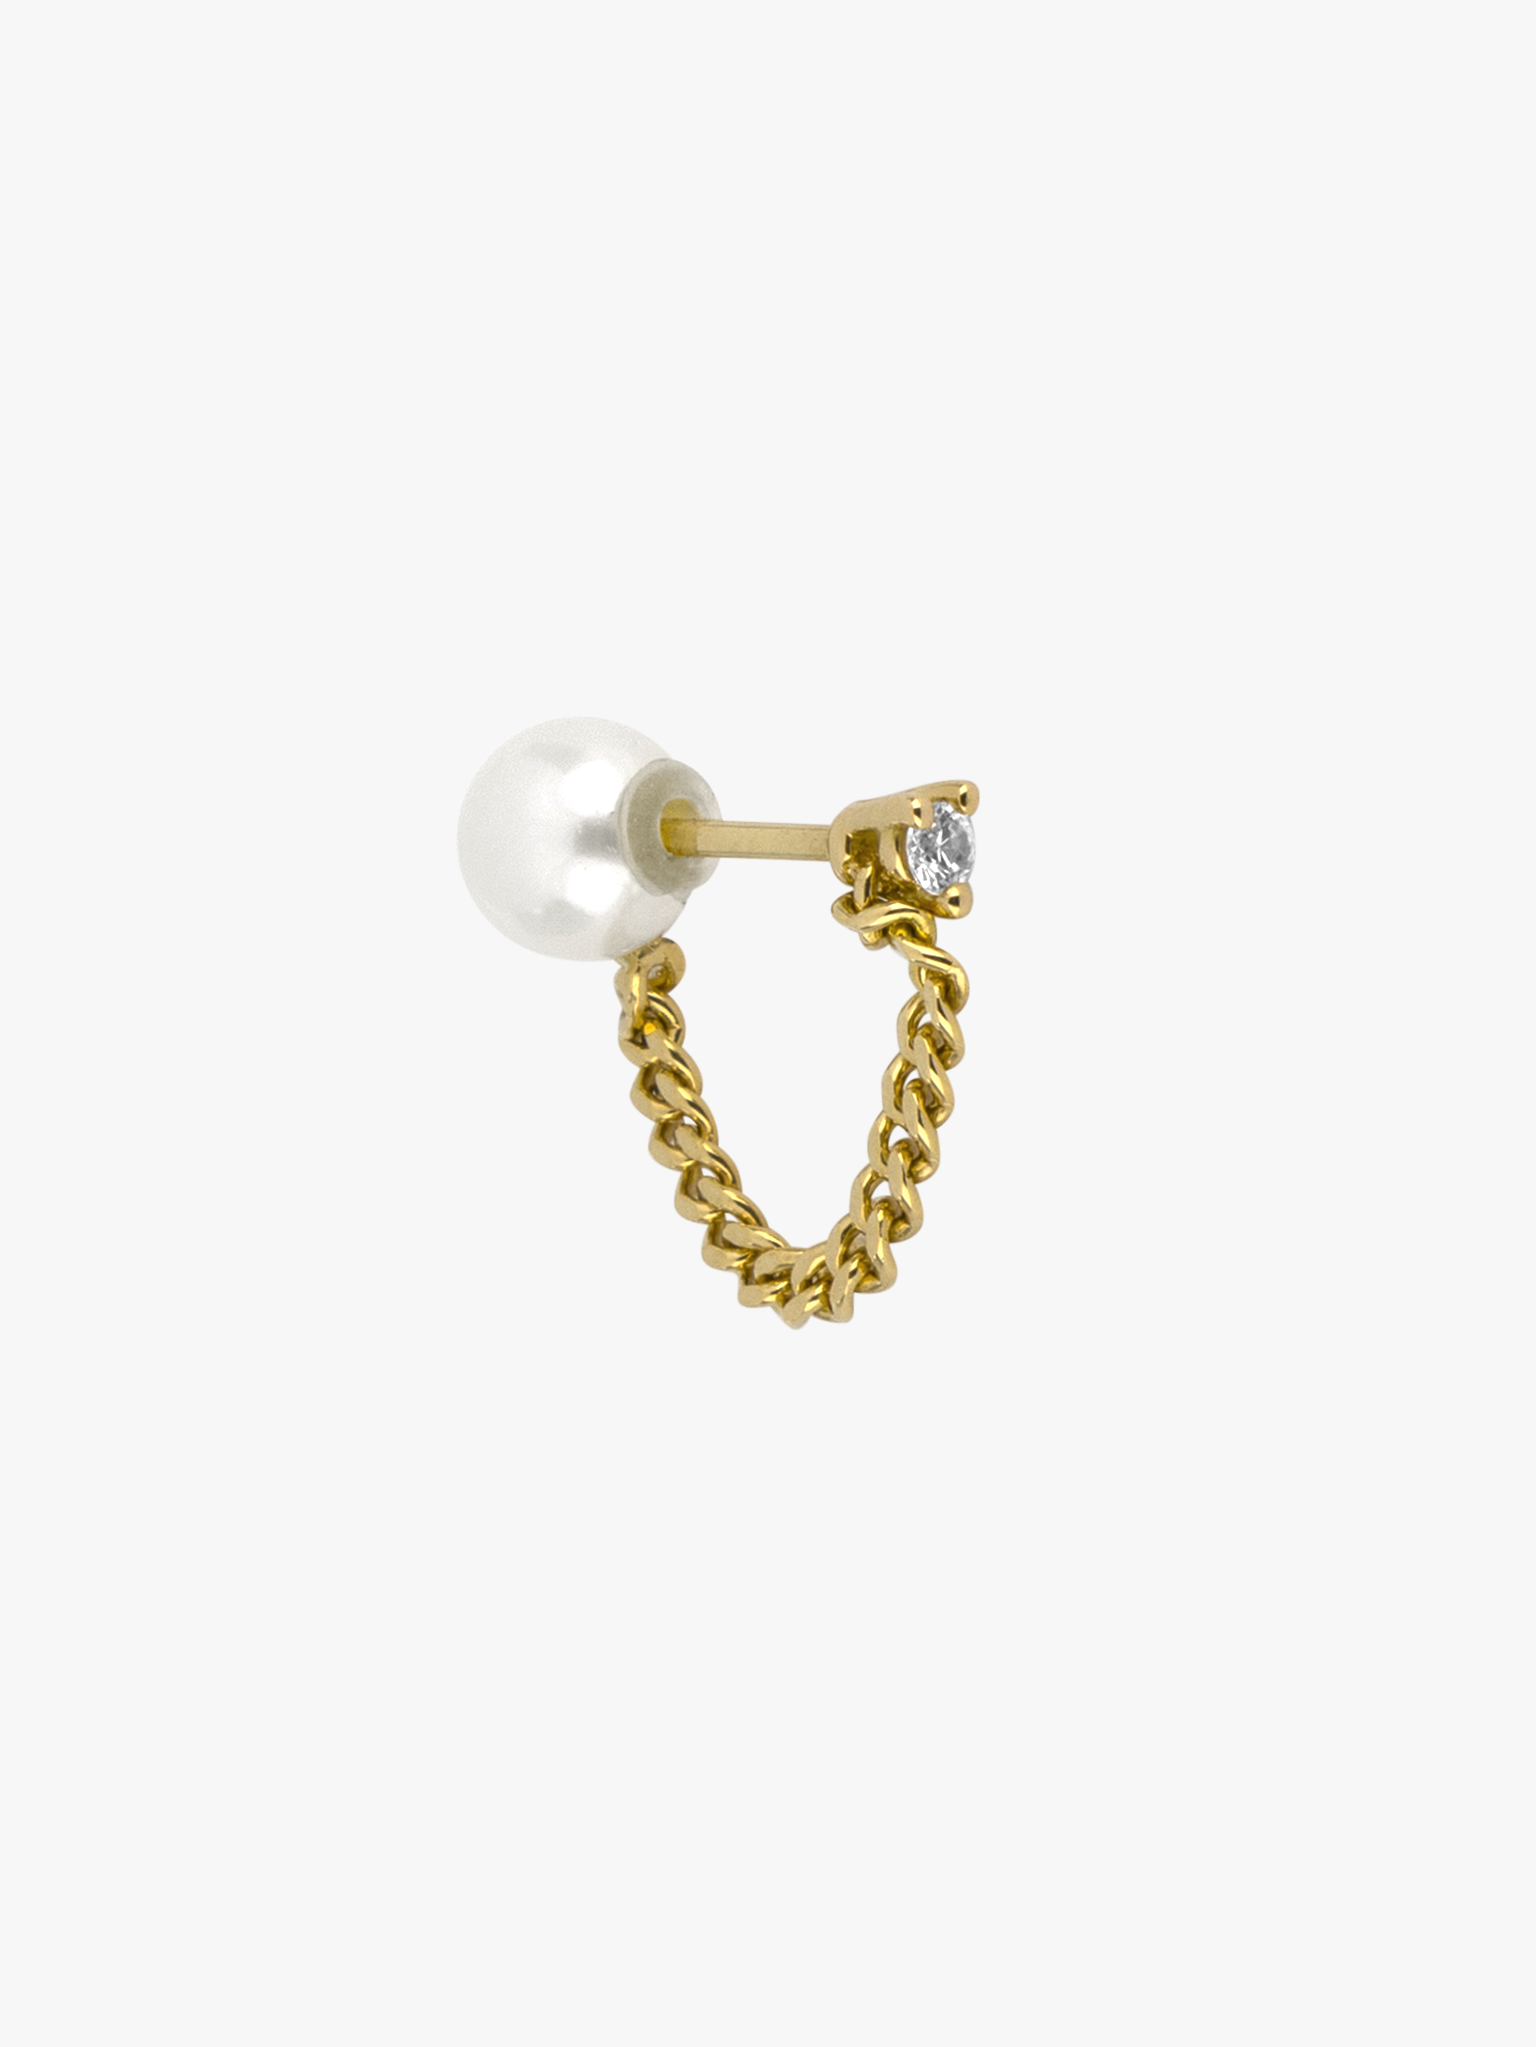 Pearl and single diamond chain earring